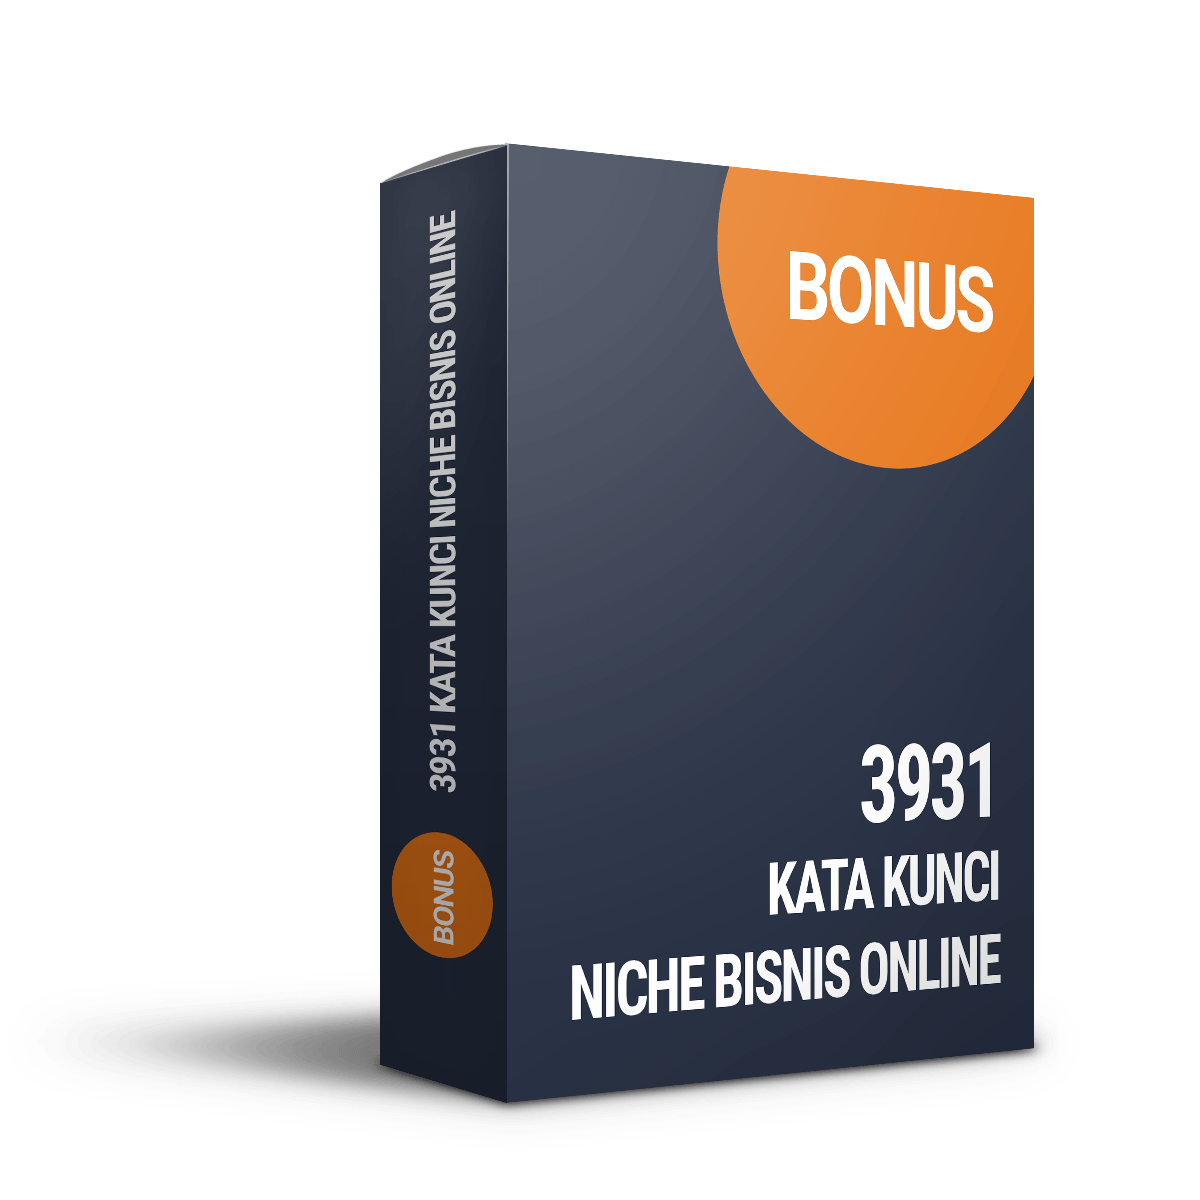 box-bonus-kyt04-Online.png